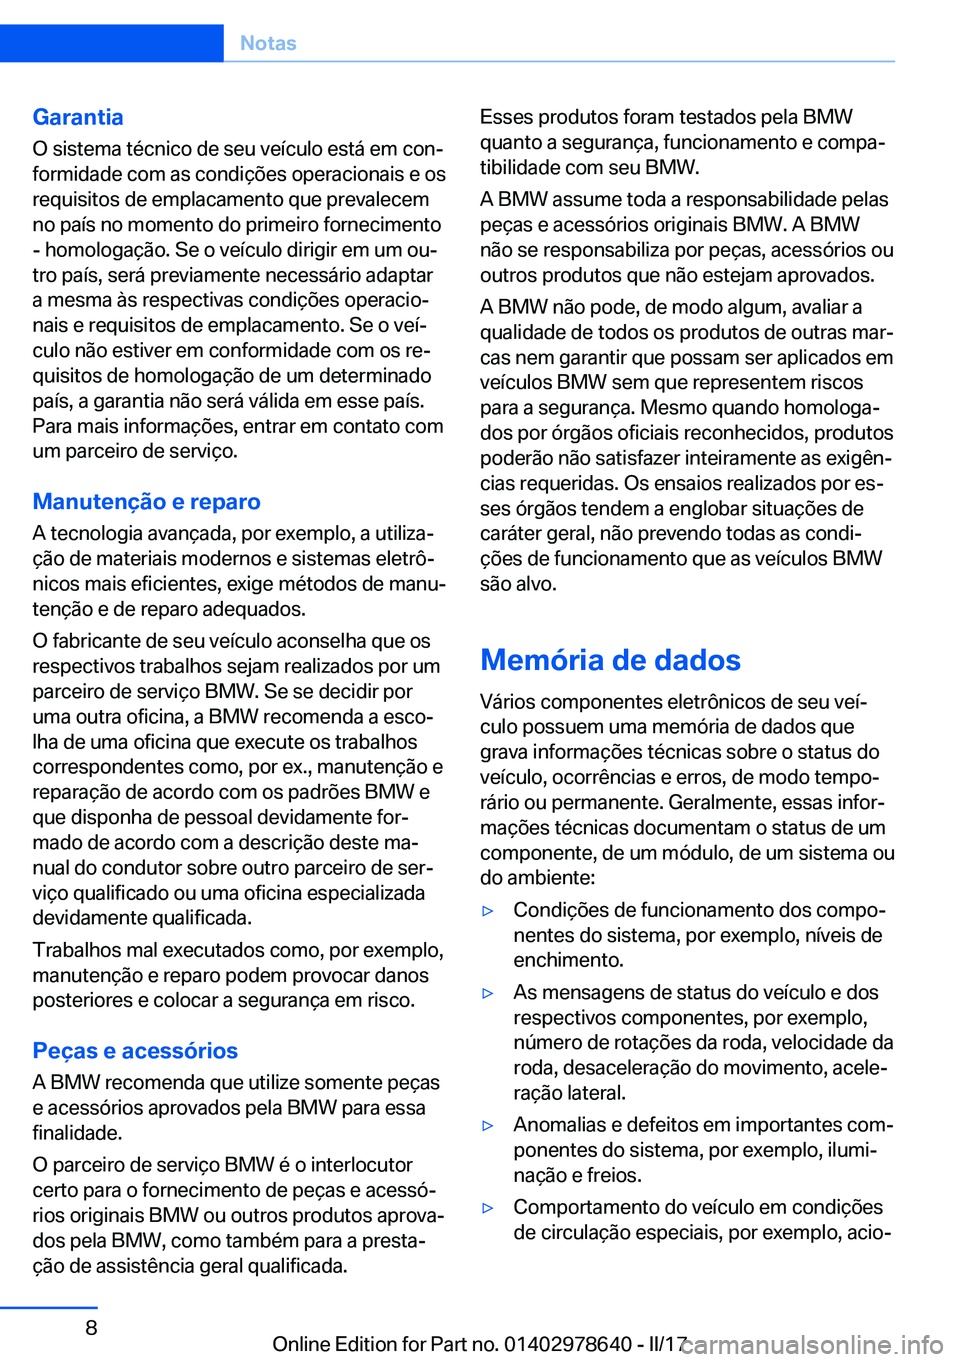 BMW 7 SERIES 2018  Manual do condutor (in Portuguese) �G�a�r�a�n�t�i�a�O� �s�i�s�t�e�m�a� �t�é�c�n�i�c�o� �d�e� �s�e�u� �v�e�